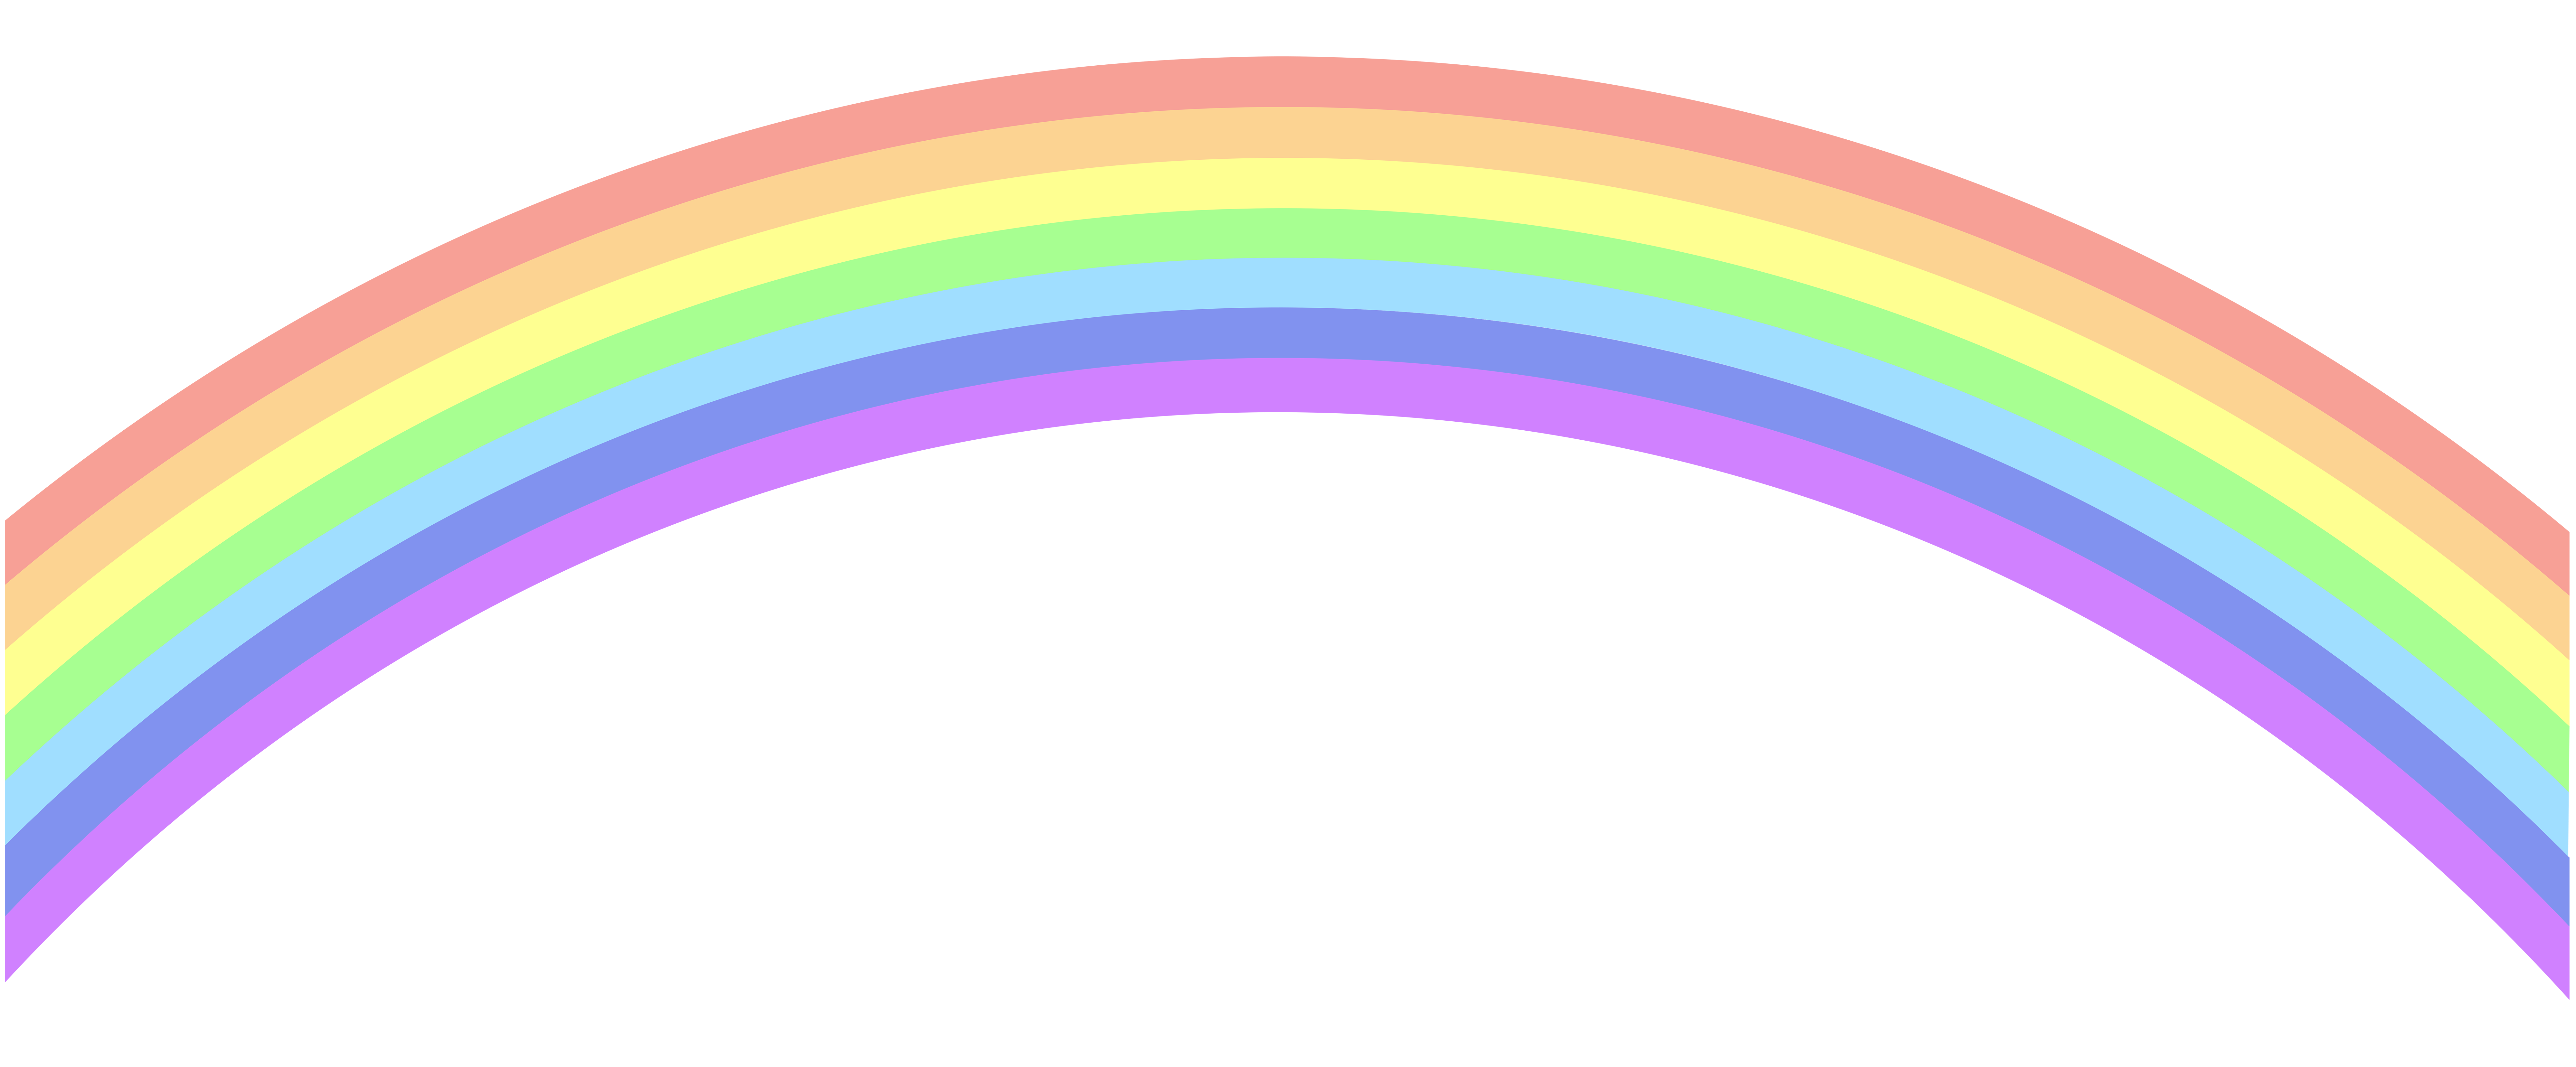 free rainbow clipart graphics - photo #21